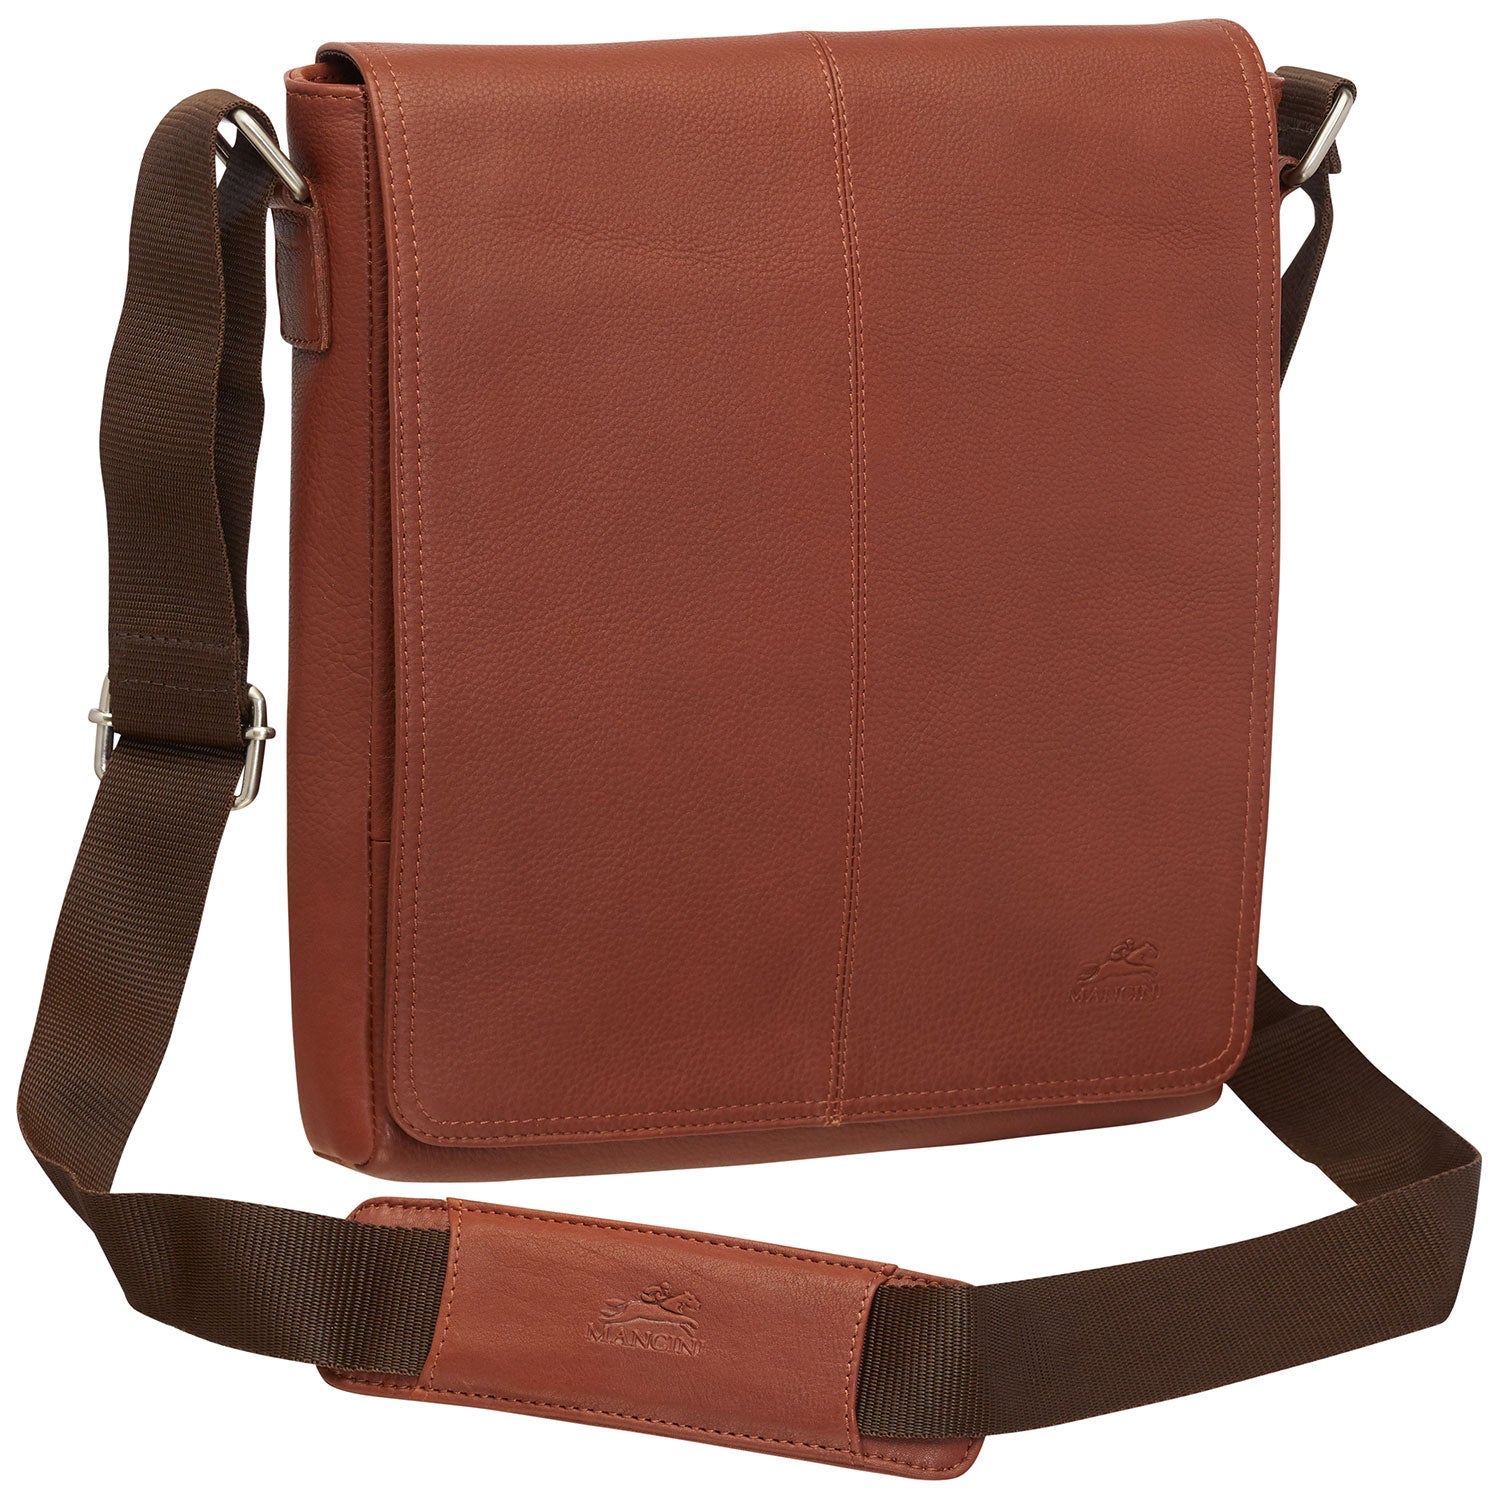 Mancini Leather Messenger Style Unisex Bag for Tablet/ E-reader, 10.25" x 3" x 12", Cognac